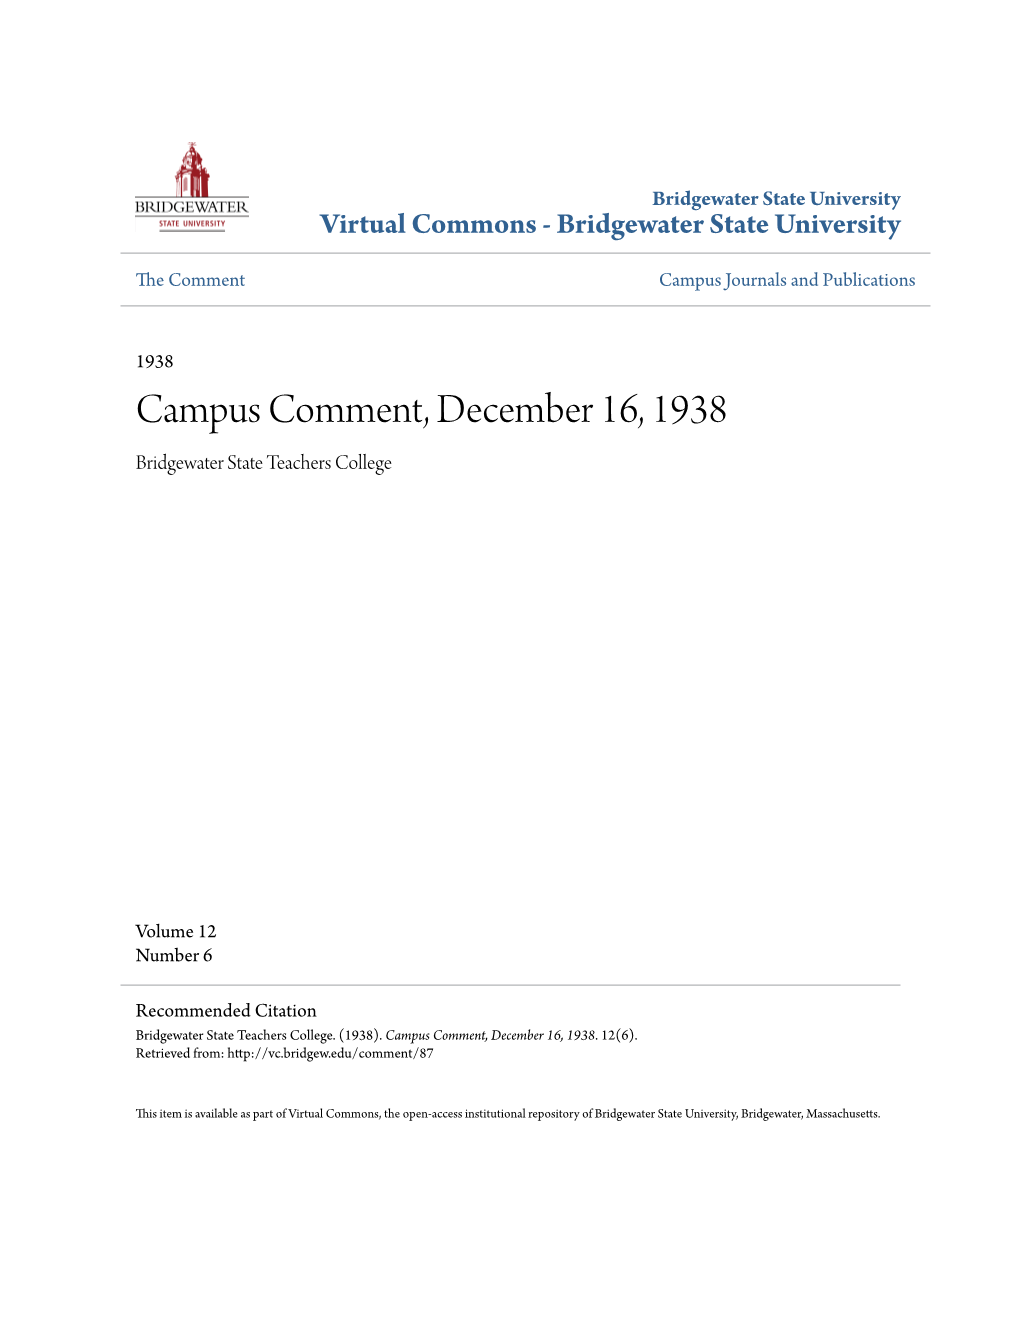 Campus Comment, December 16, 1938 Bridgewater State Teachers College